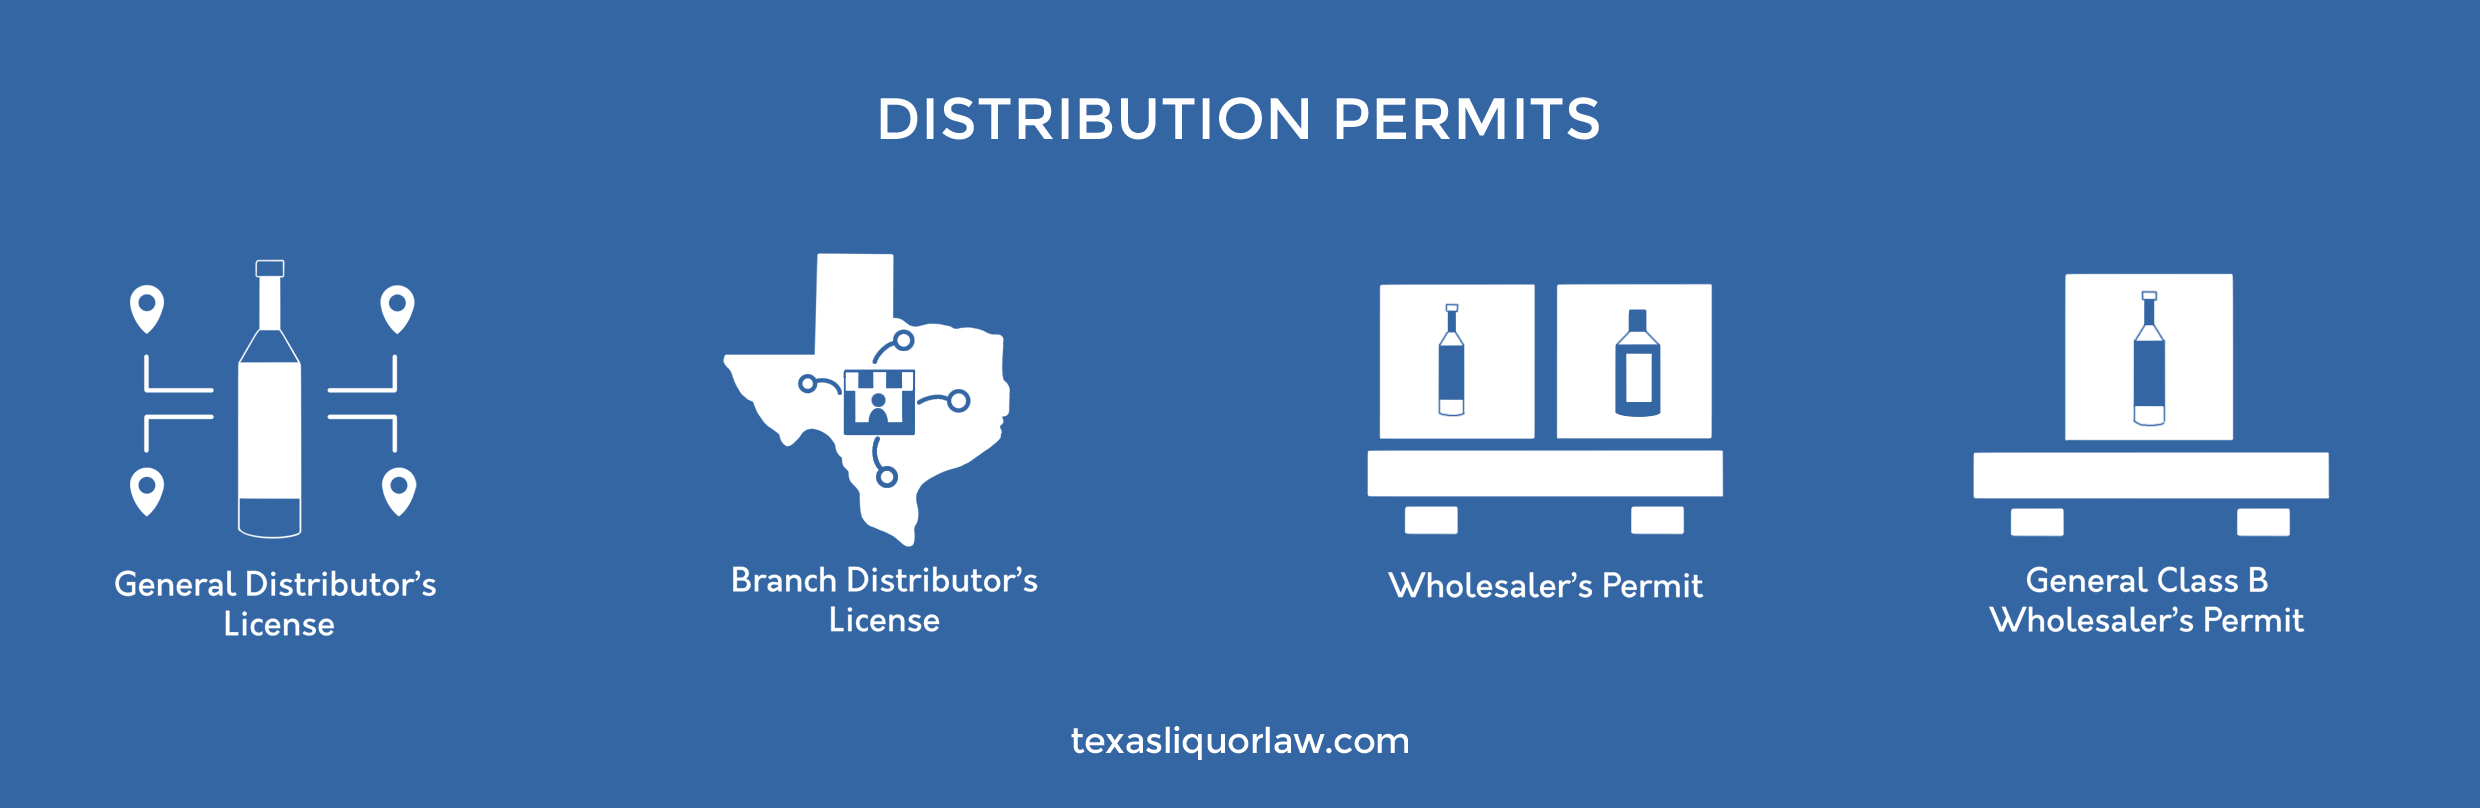 TABC Distribution Permits